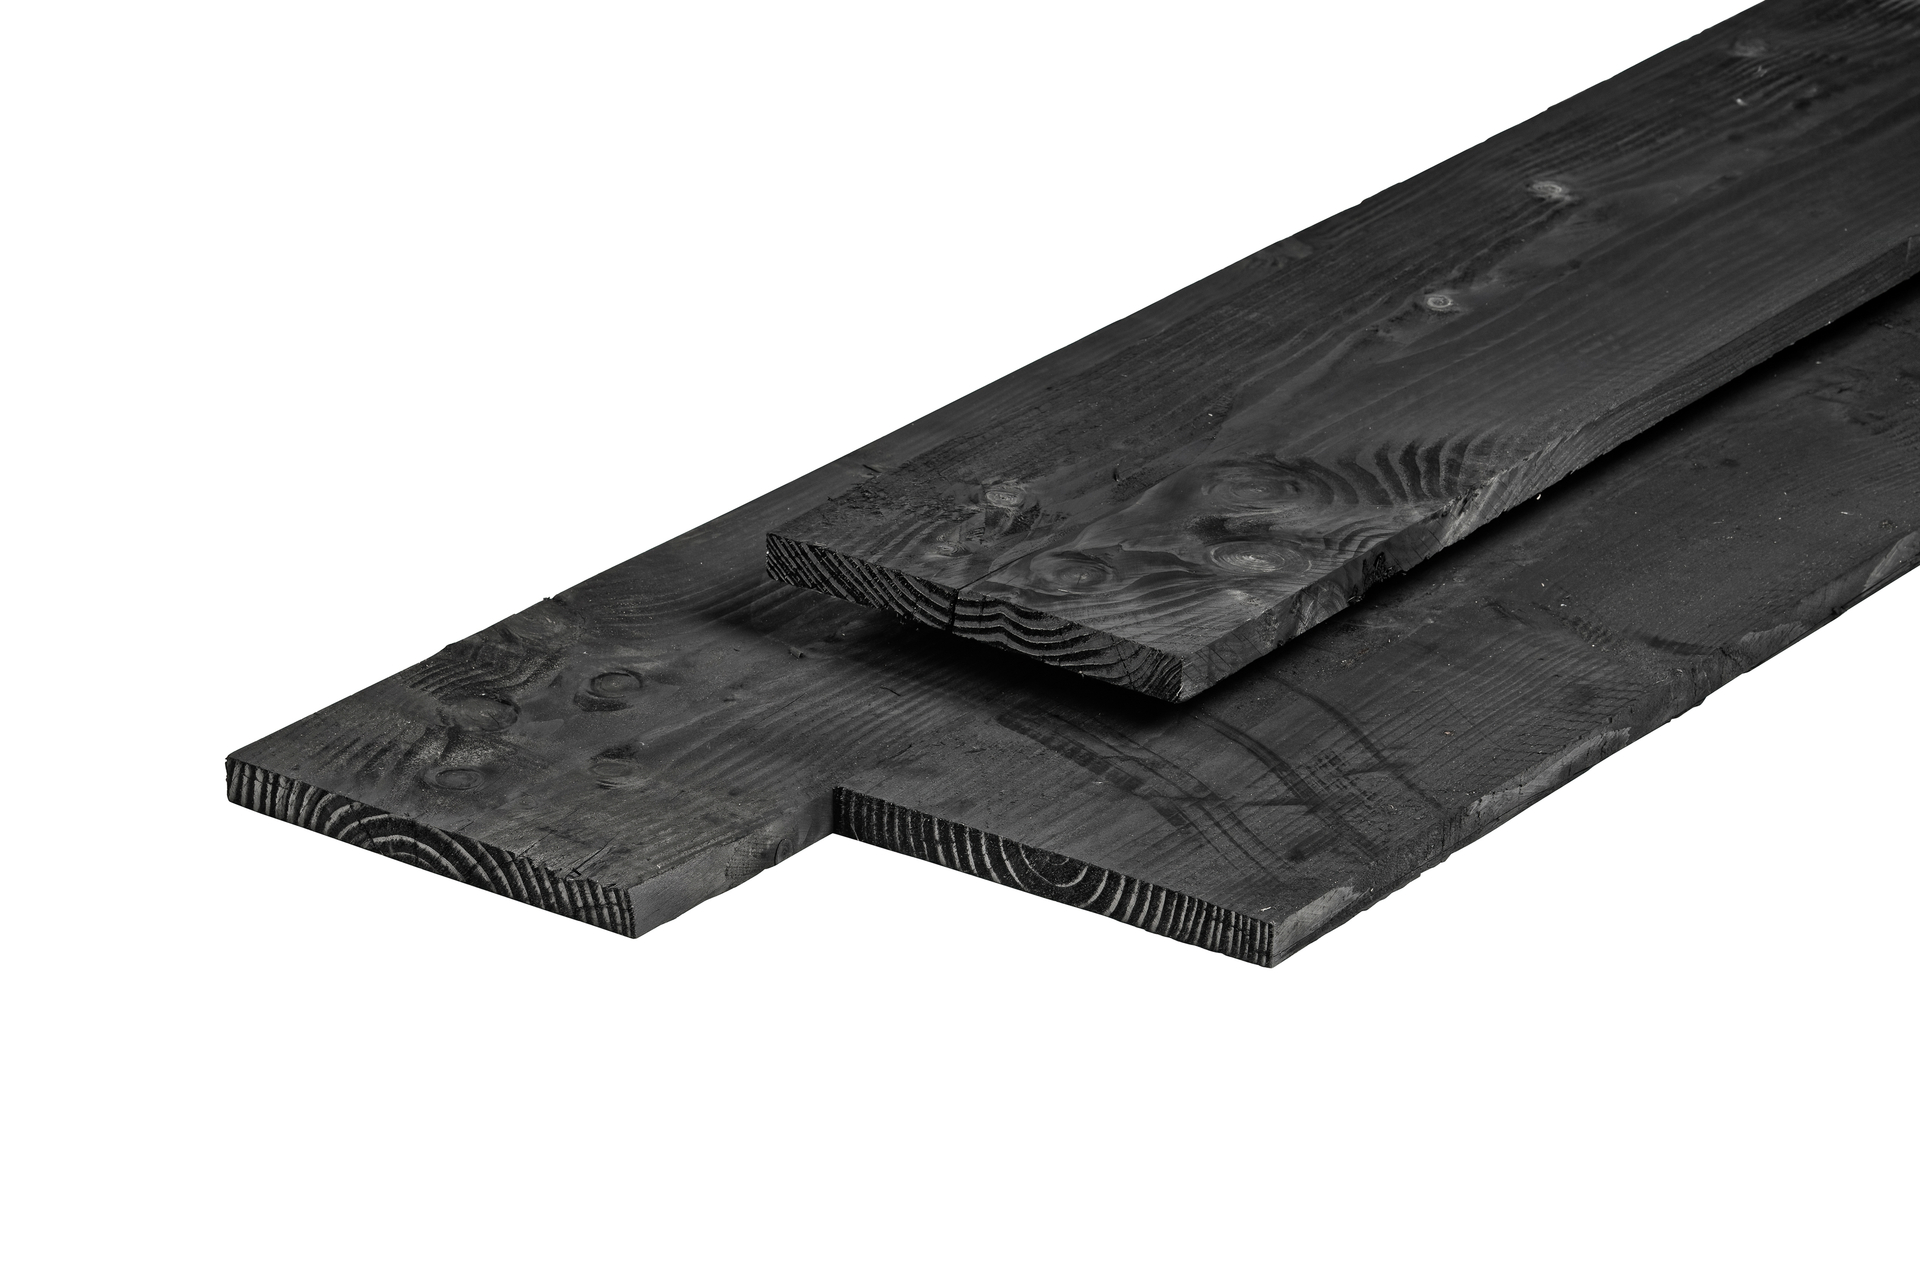 Tuinplank lariks/douglas, zwart geïmpregneerd 2.5x25.0x500cm